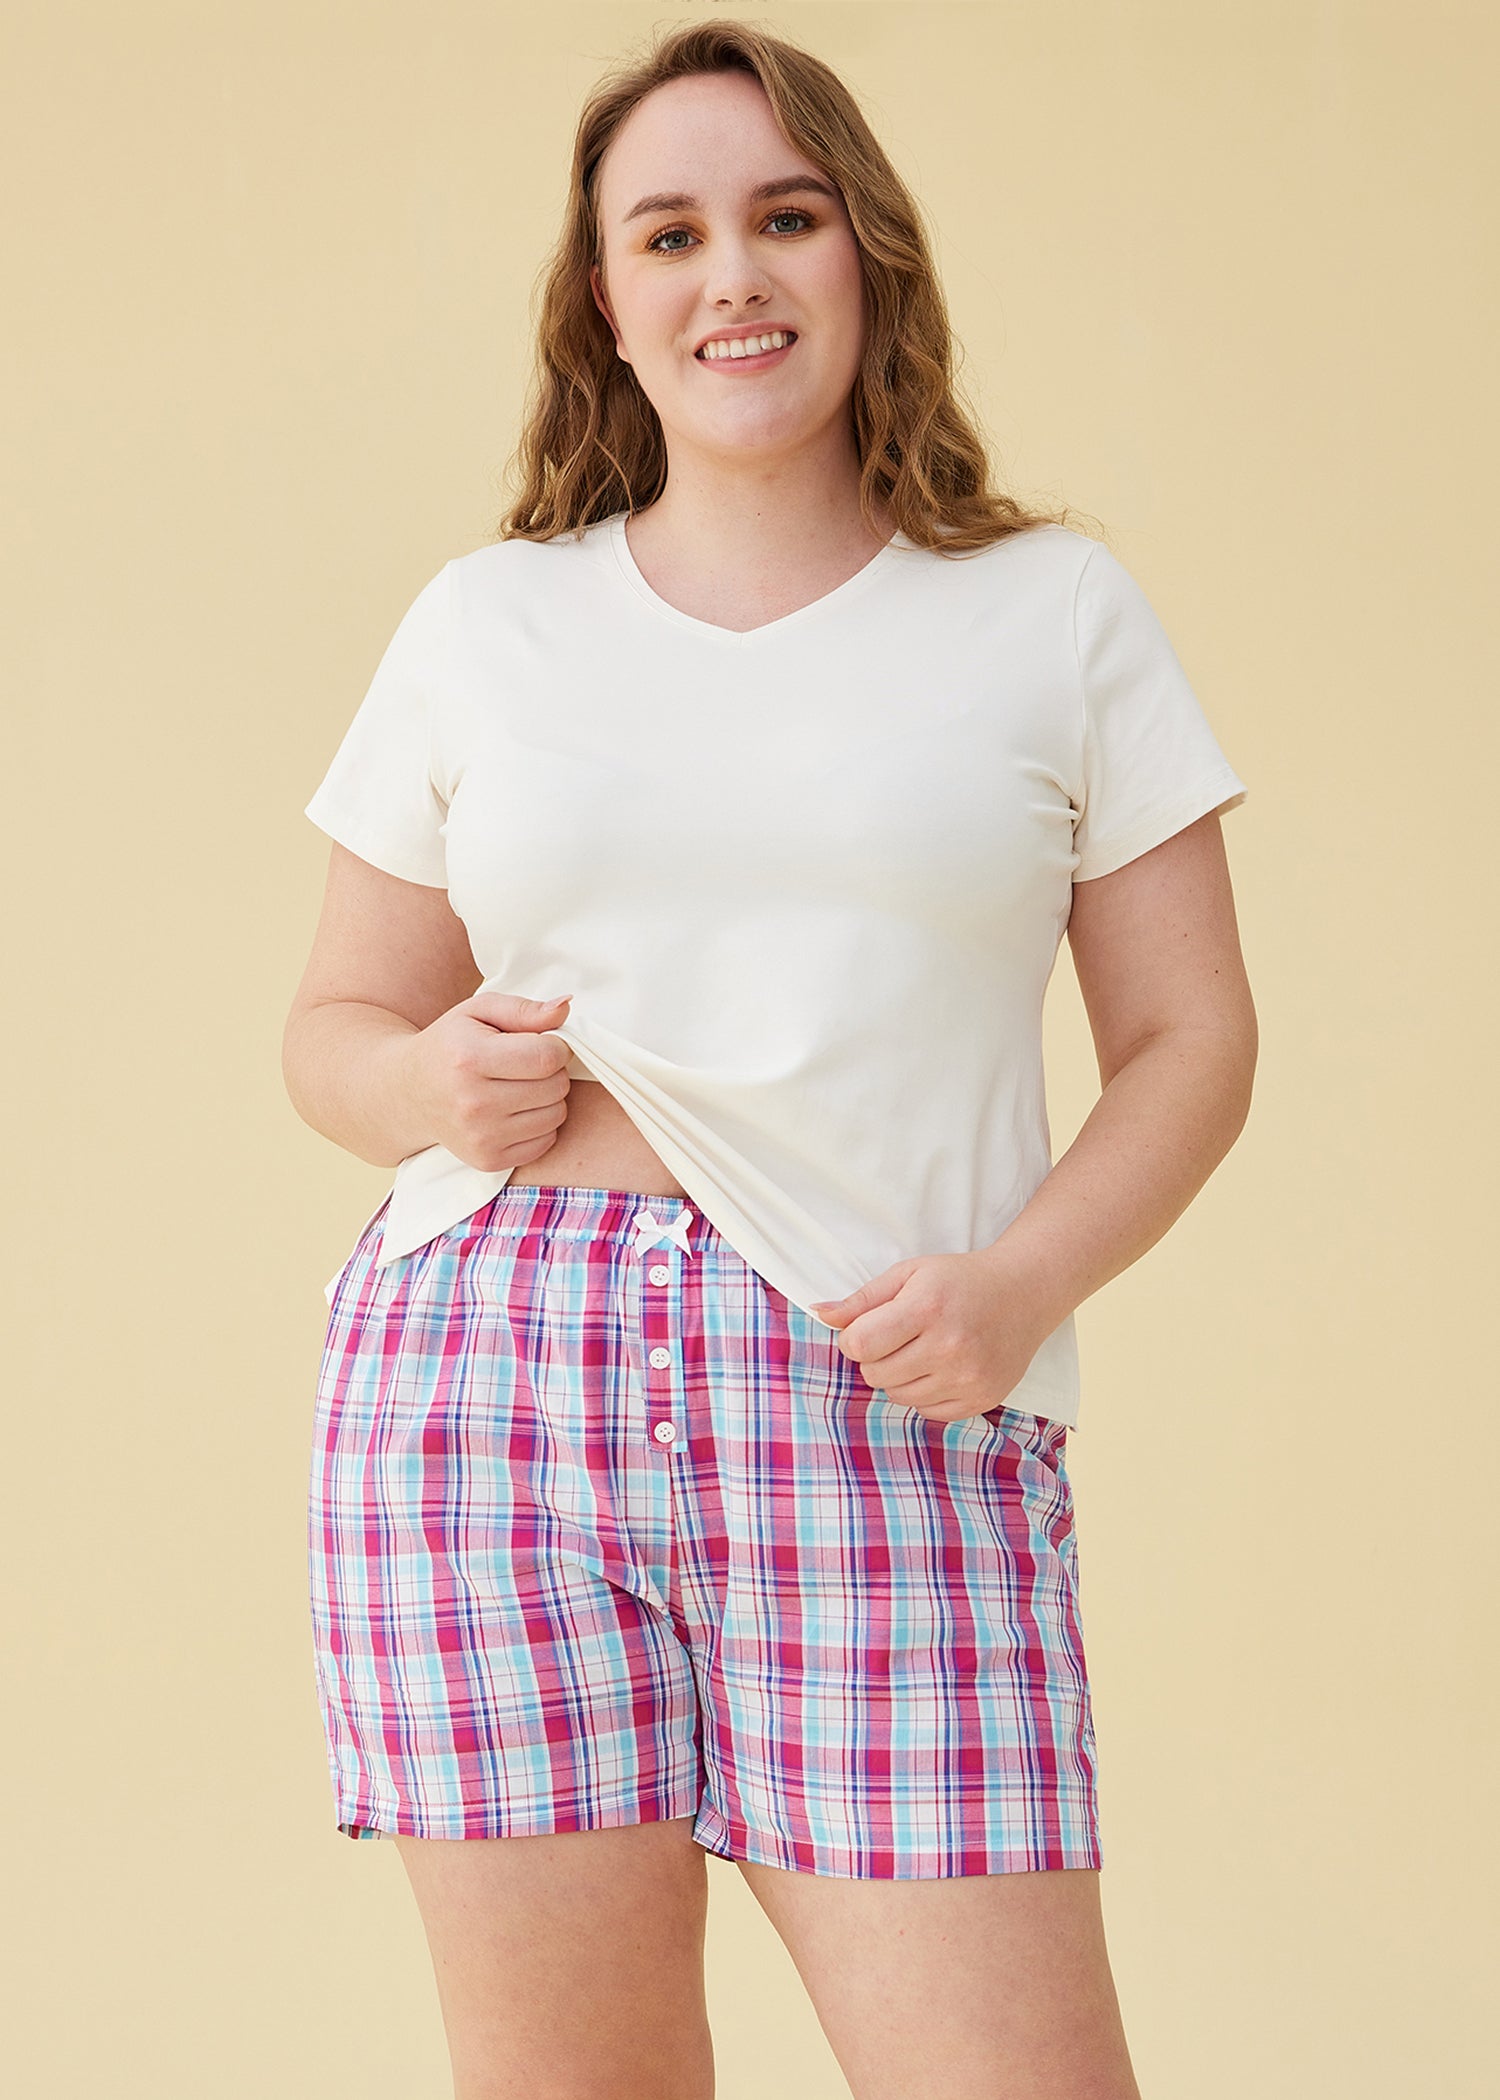 Latuza Women's Sleepwear Cotton Plaid Pajama Boxer Shorts S Navy